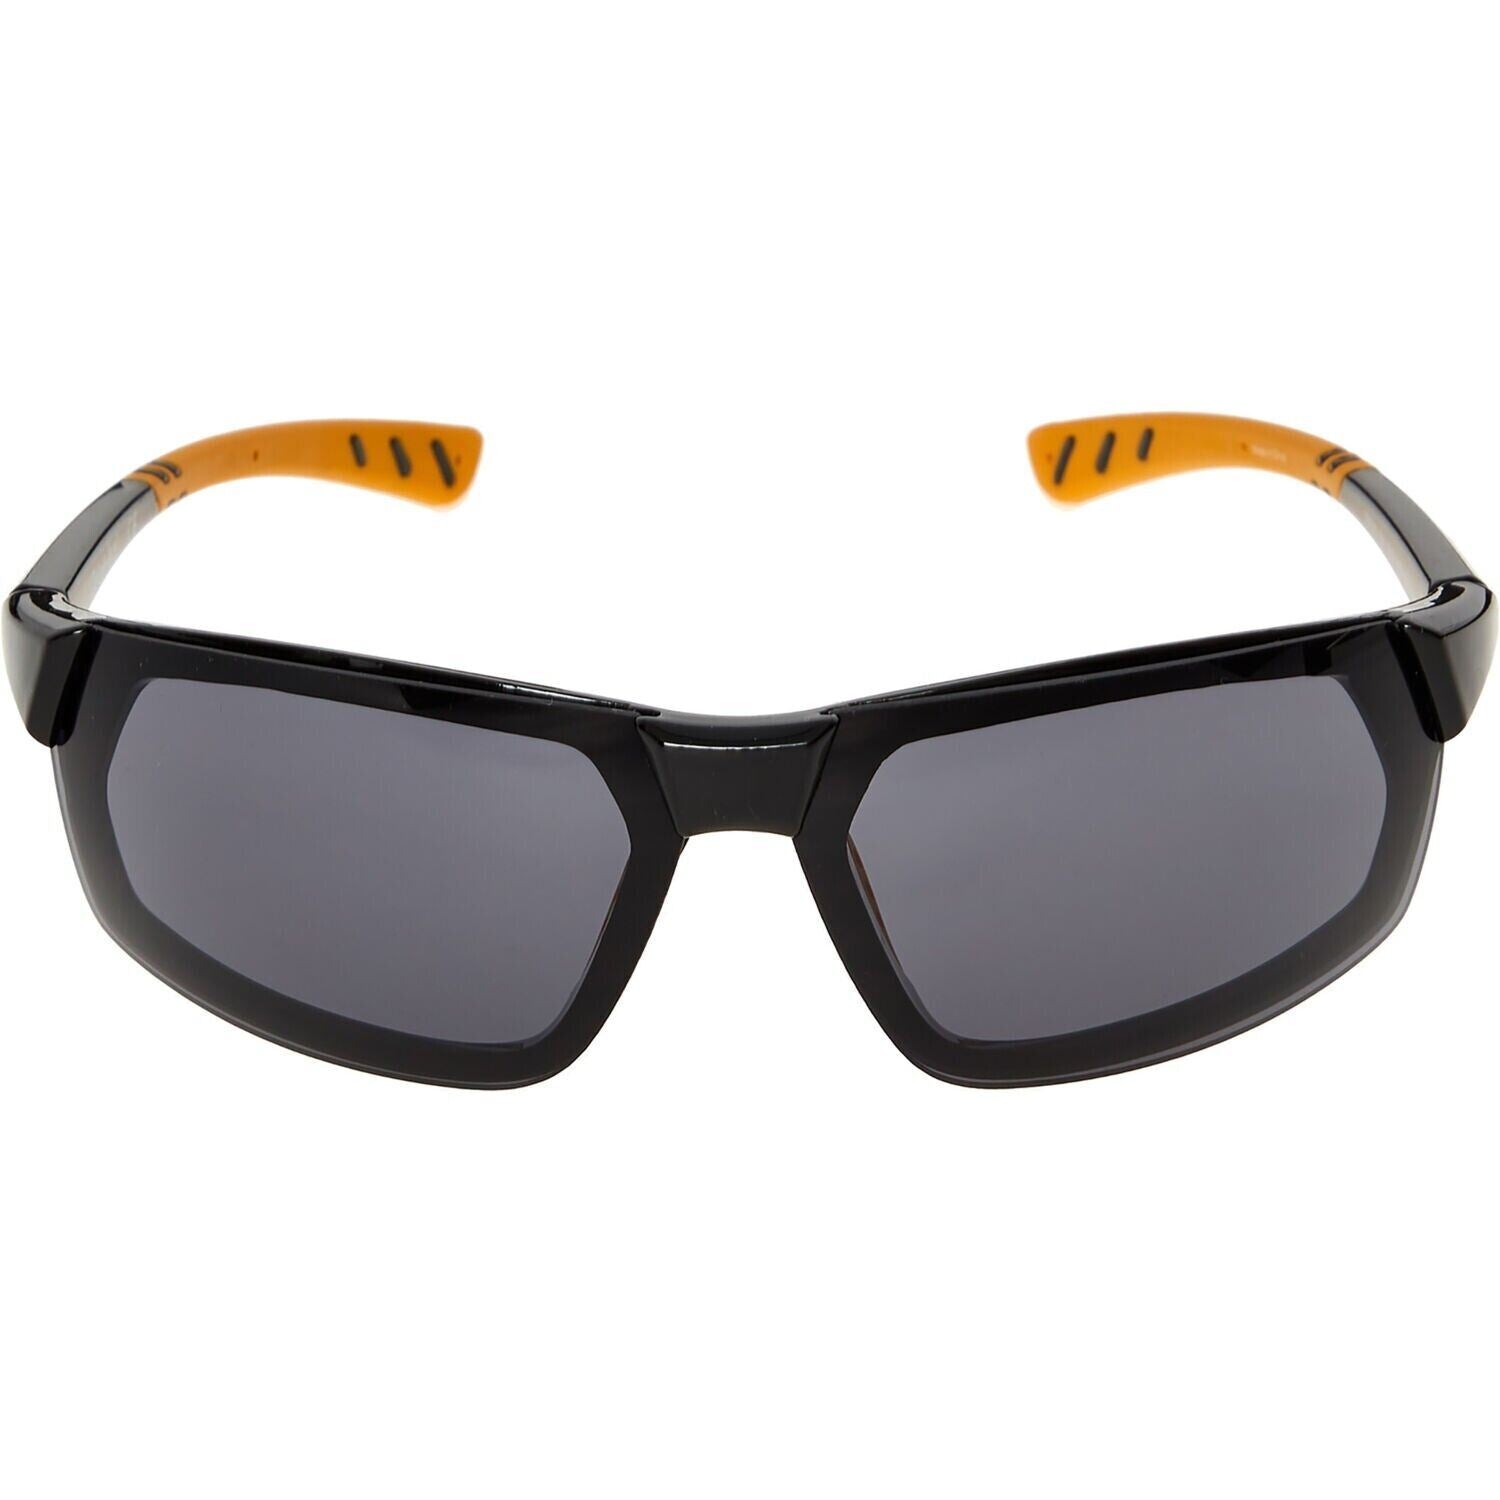 TIMBERLAND Men's Black & Yellow Wrap Sunglasses, TB7219